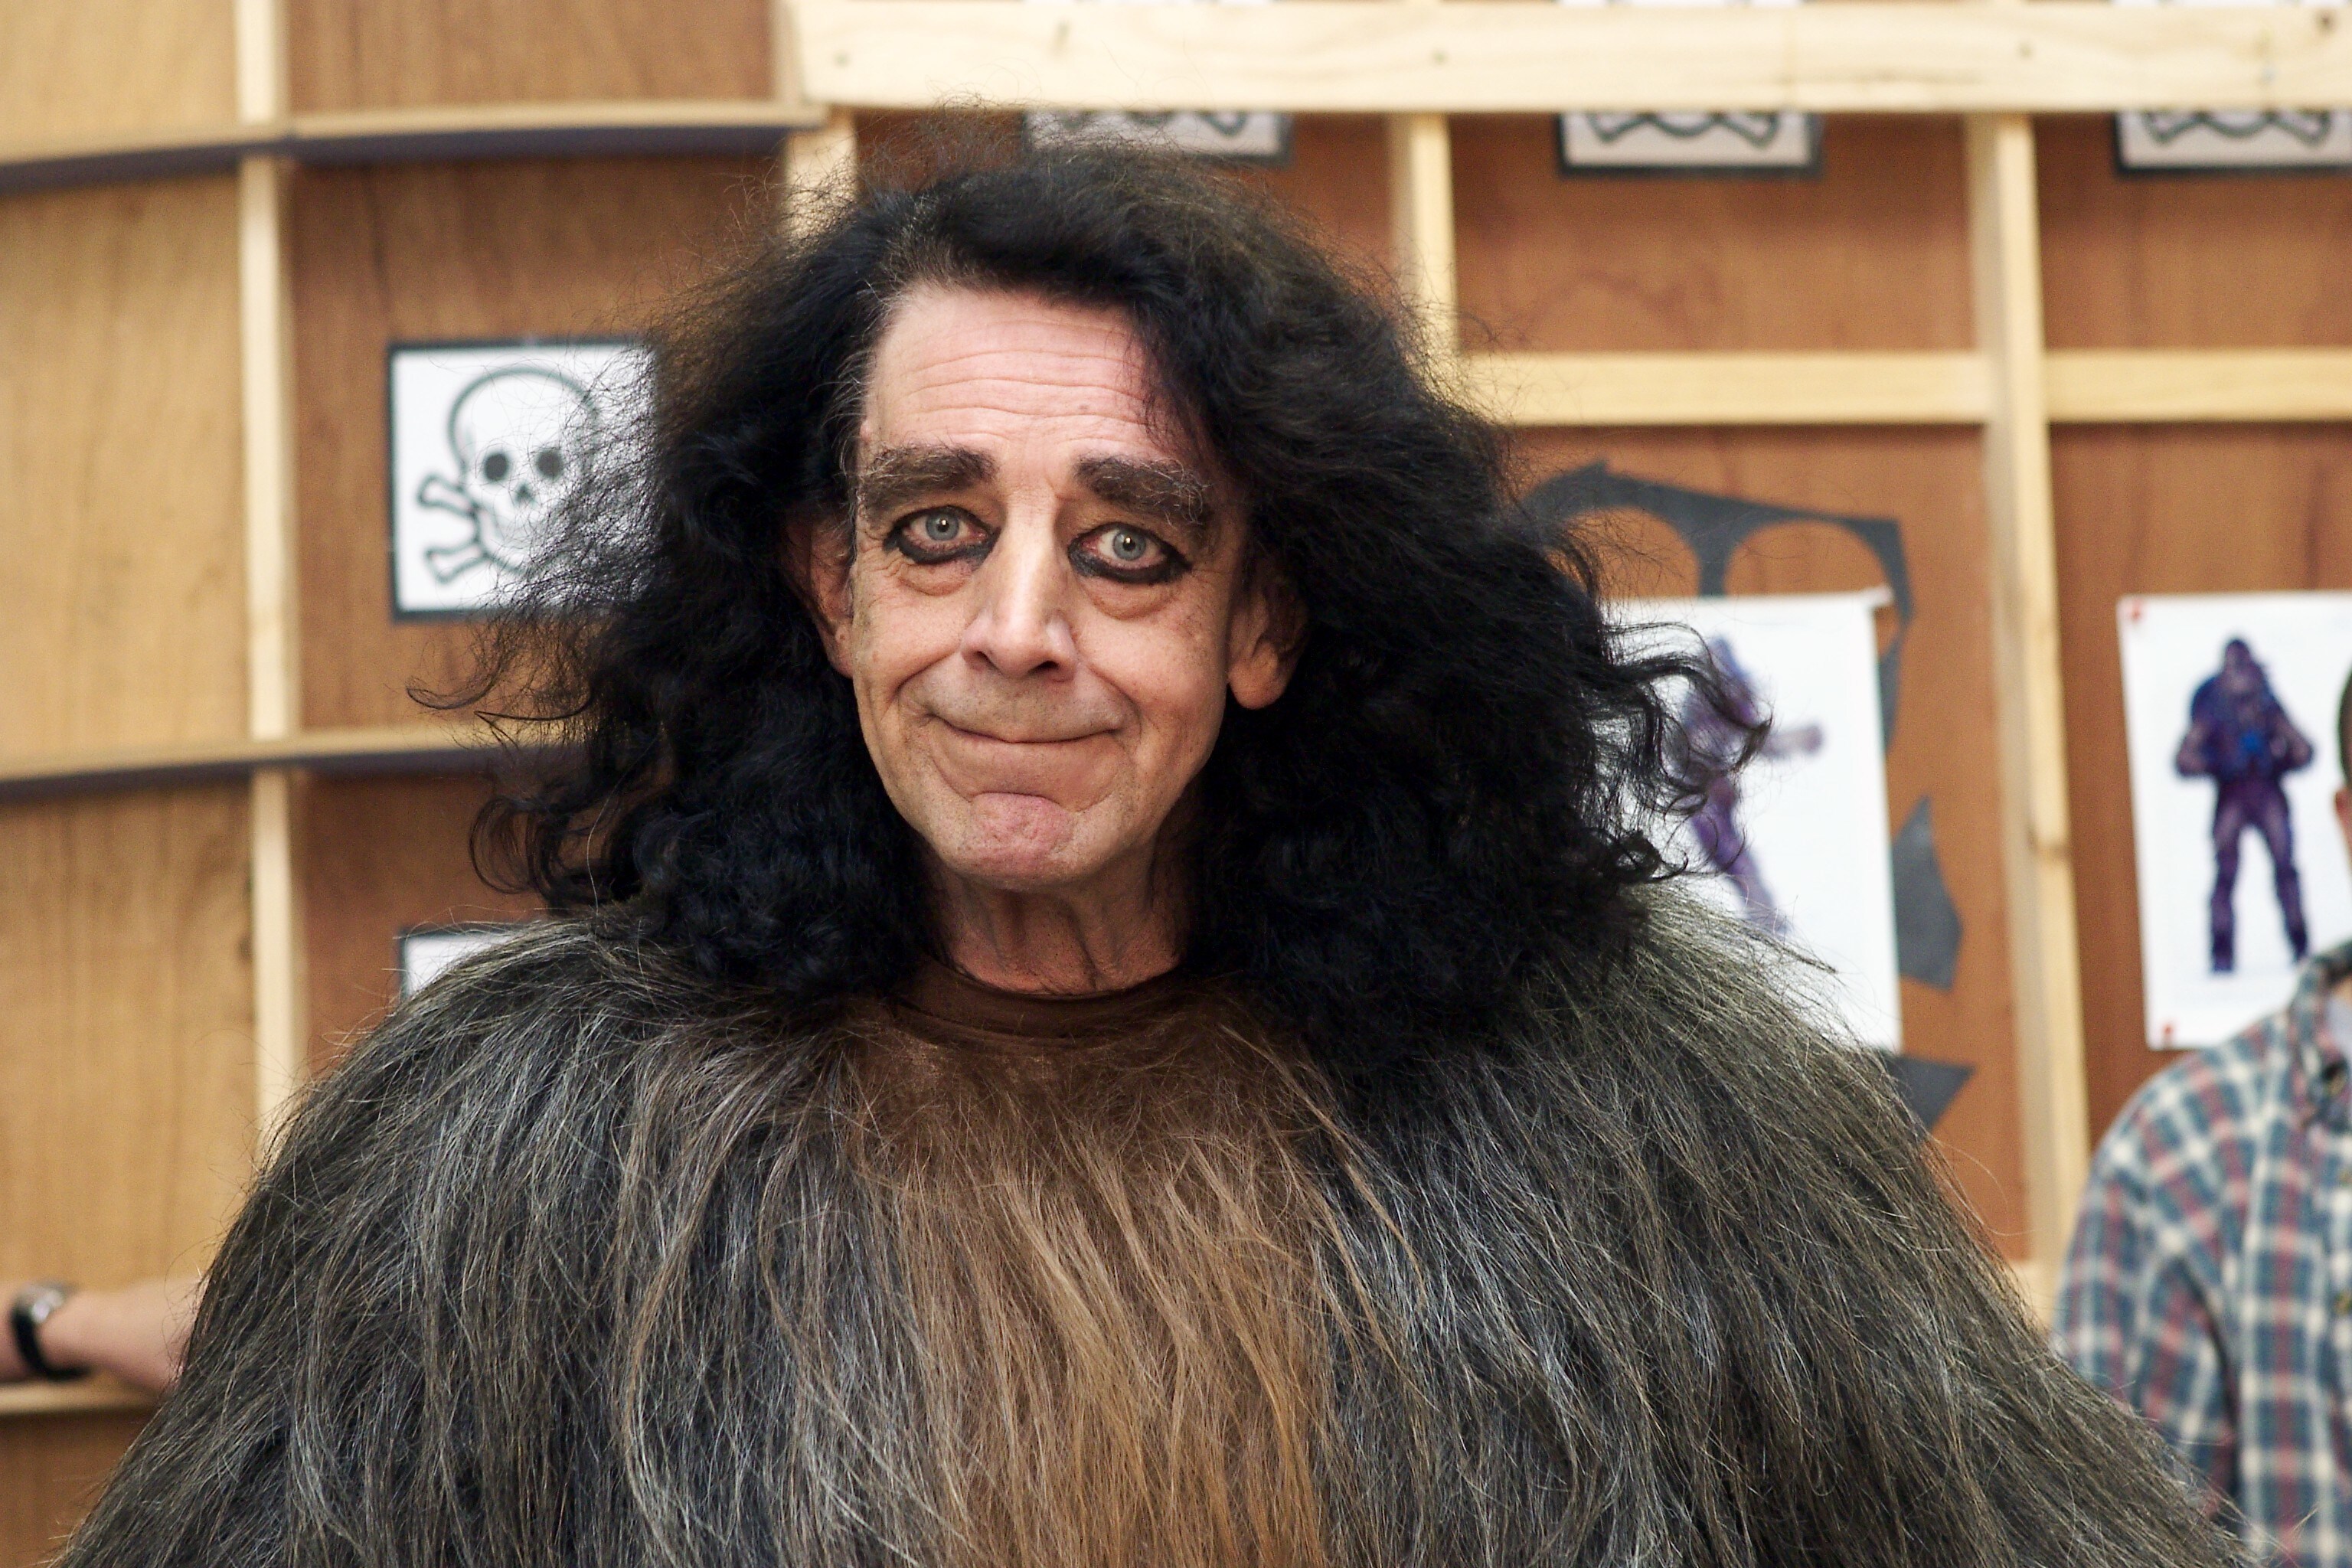 Peter Mayhew in-costume as Chewbacca.